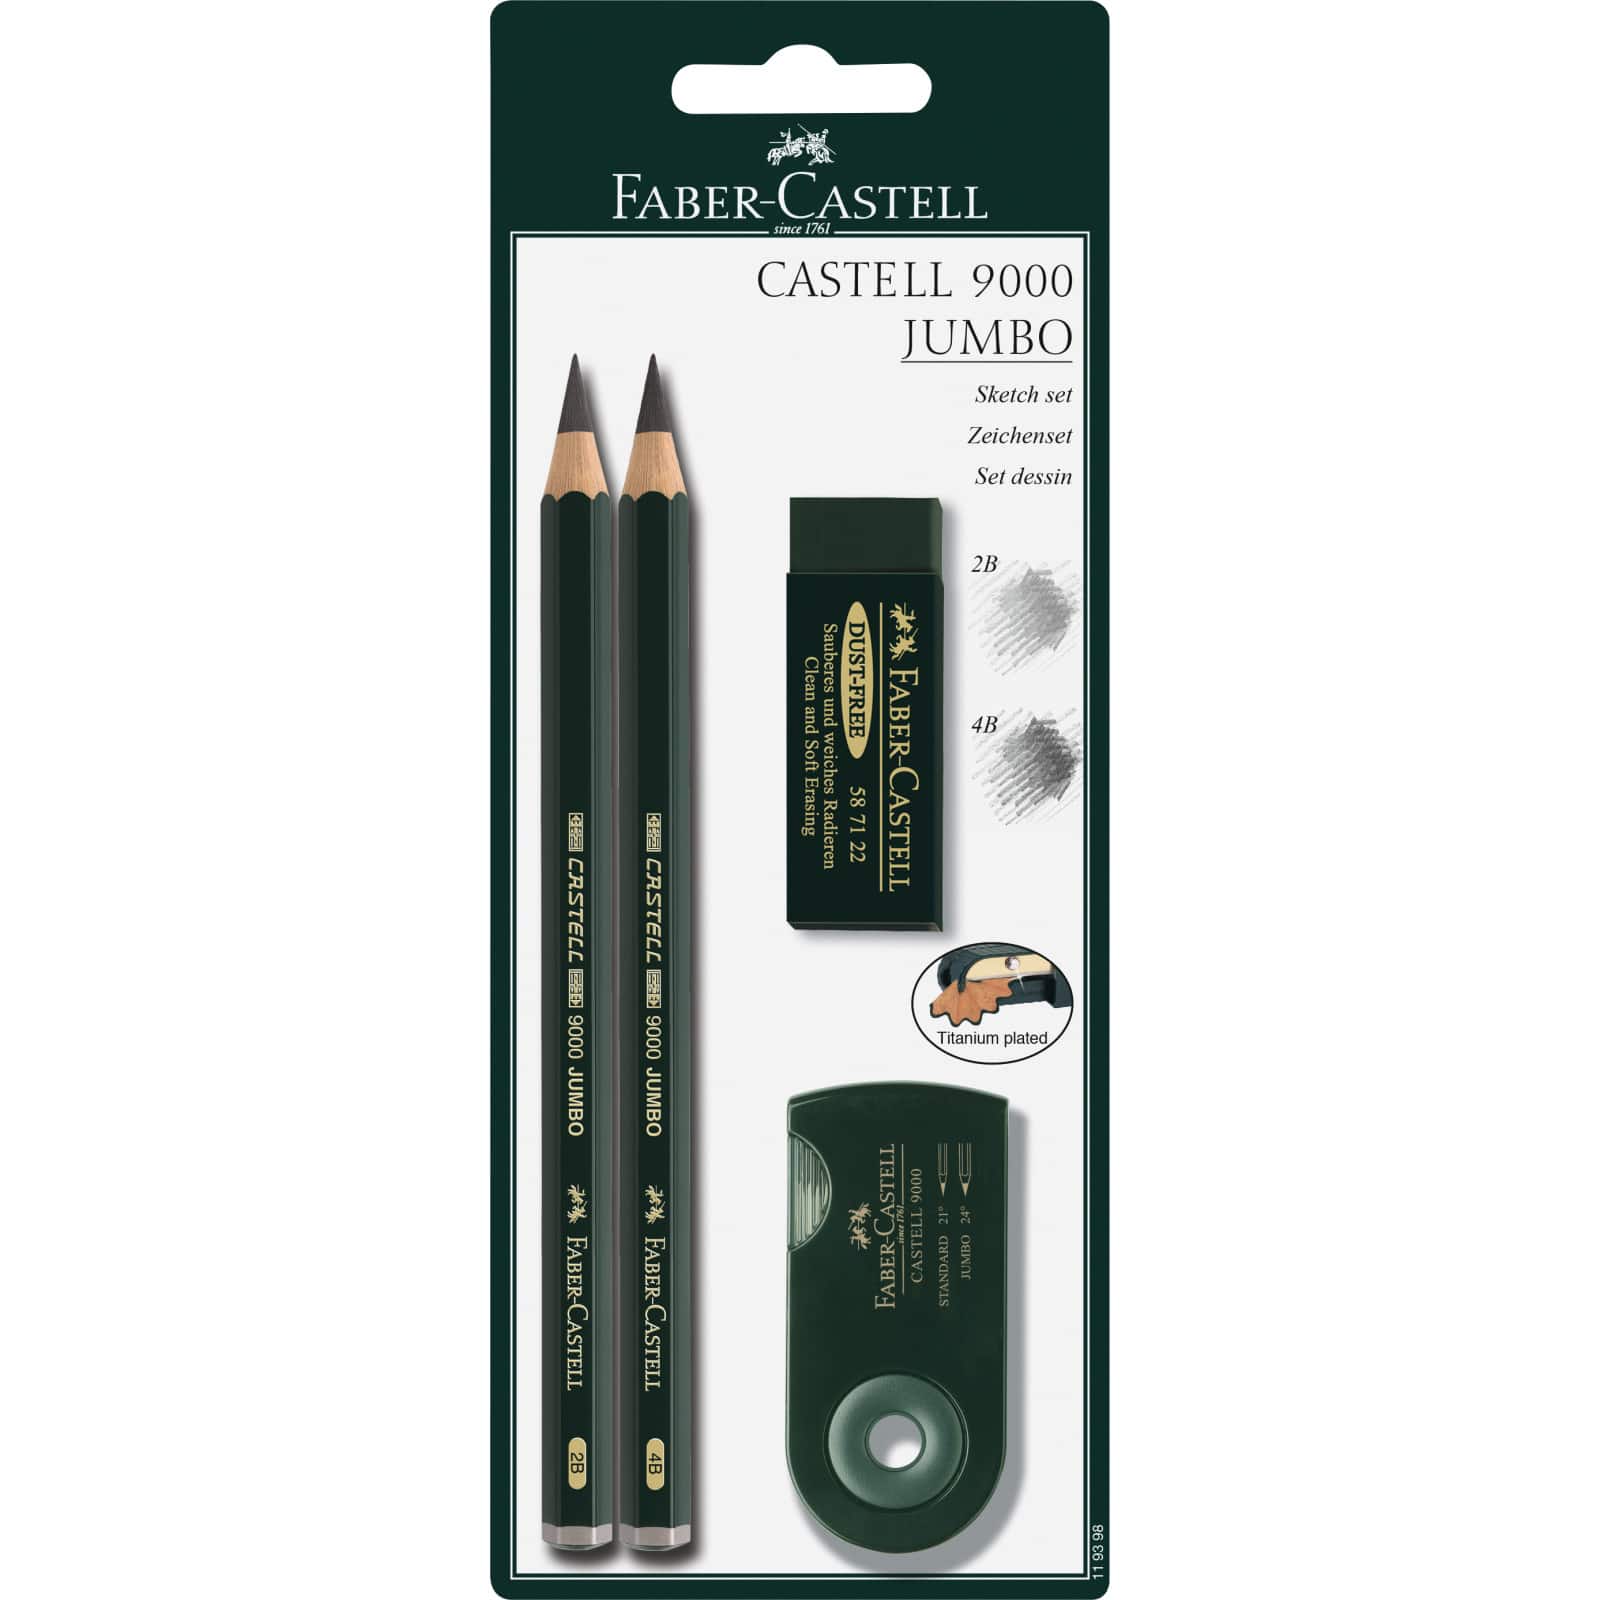 Faber-Castell Castell 9000 Jumbo Graded Graphite Pencil